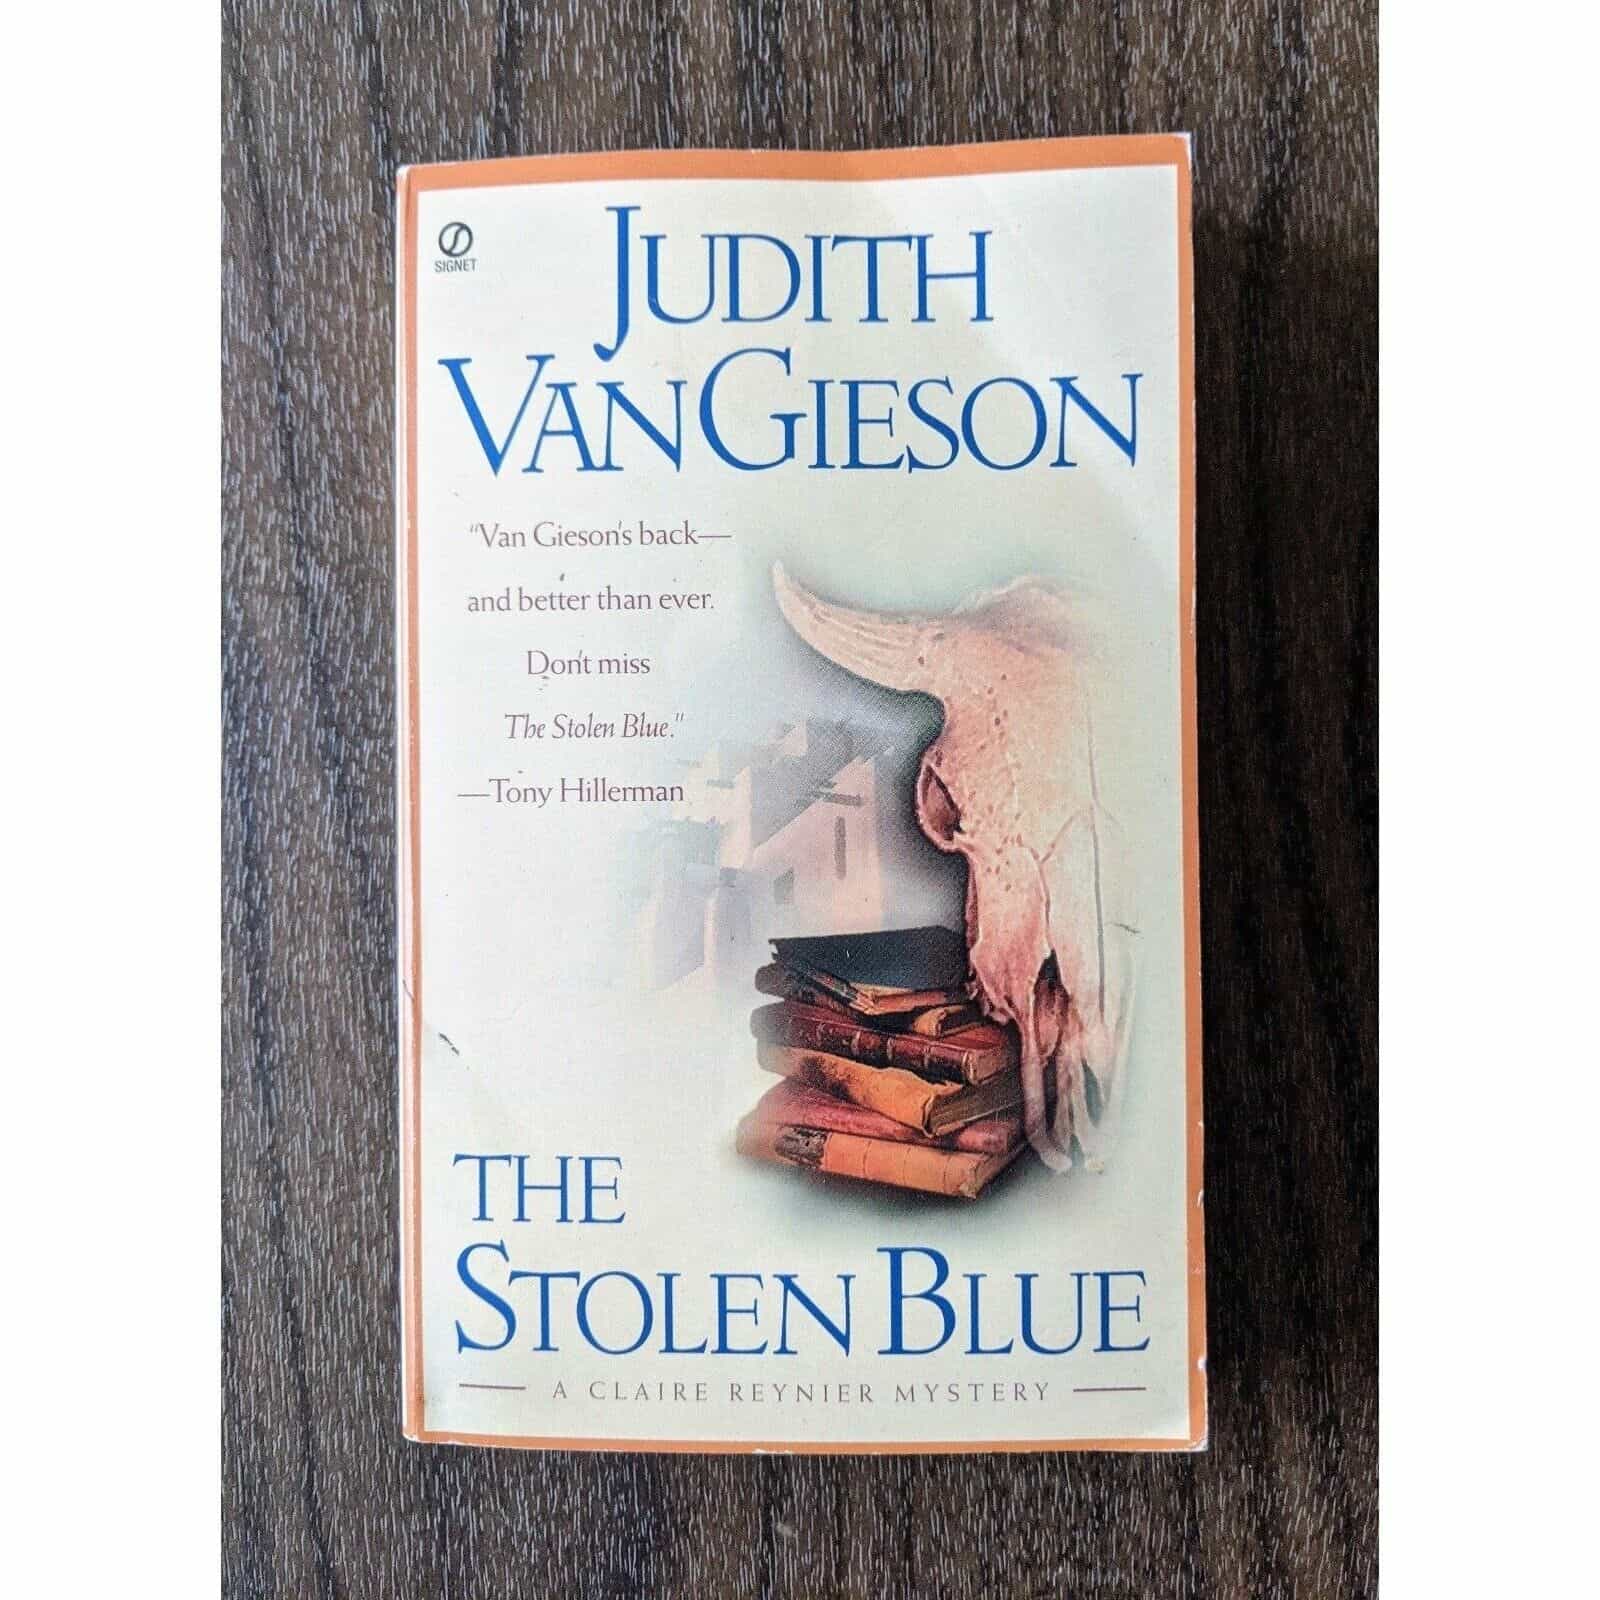 The Stolen Blue by Judith Van Gieson Book